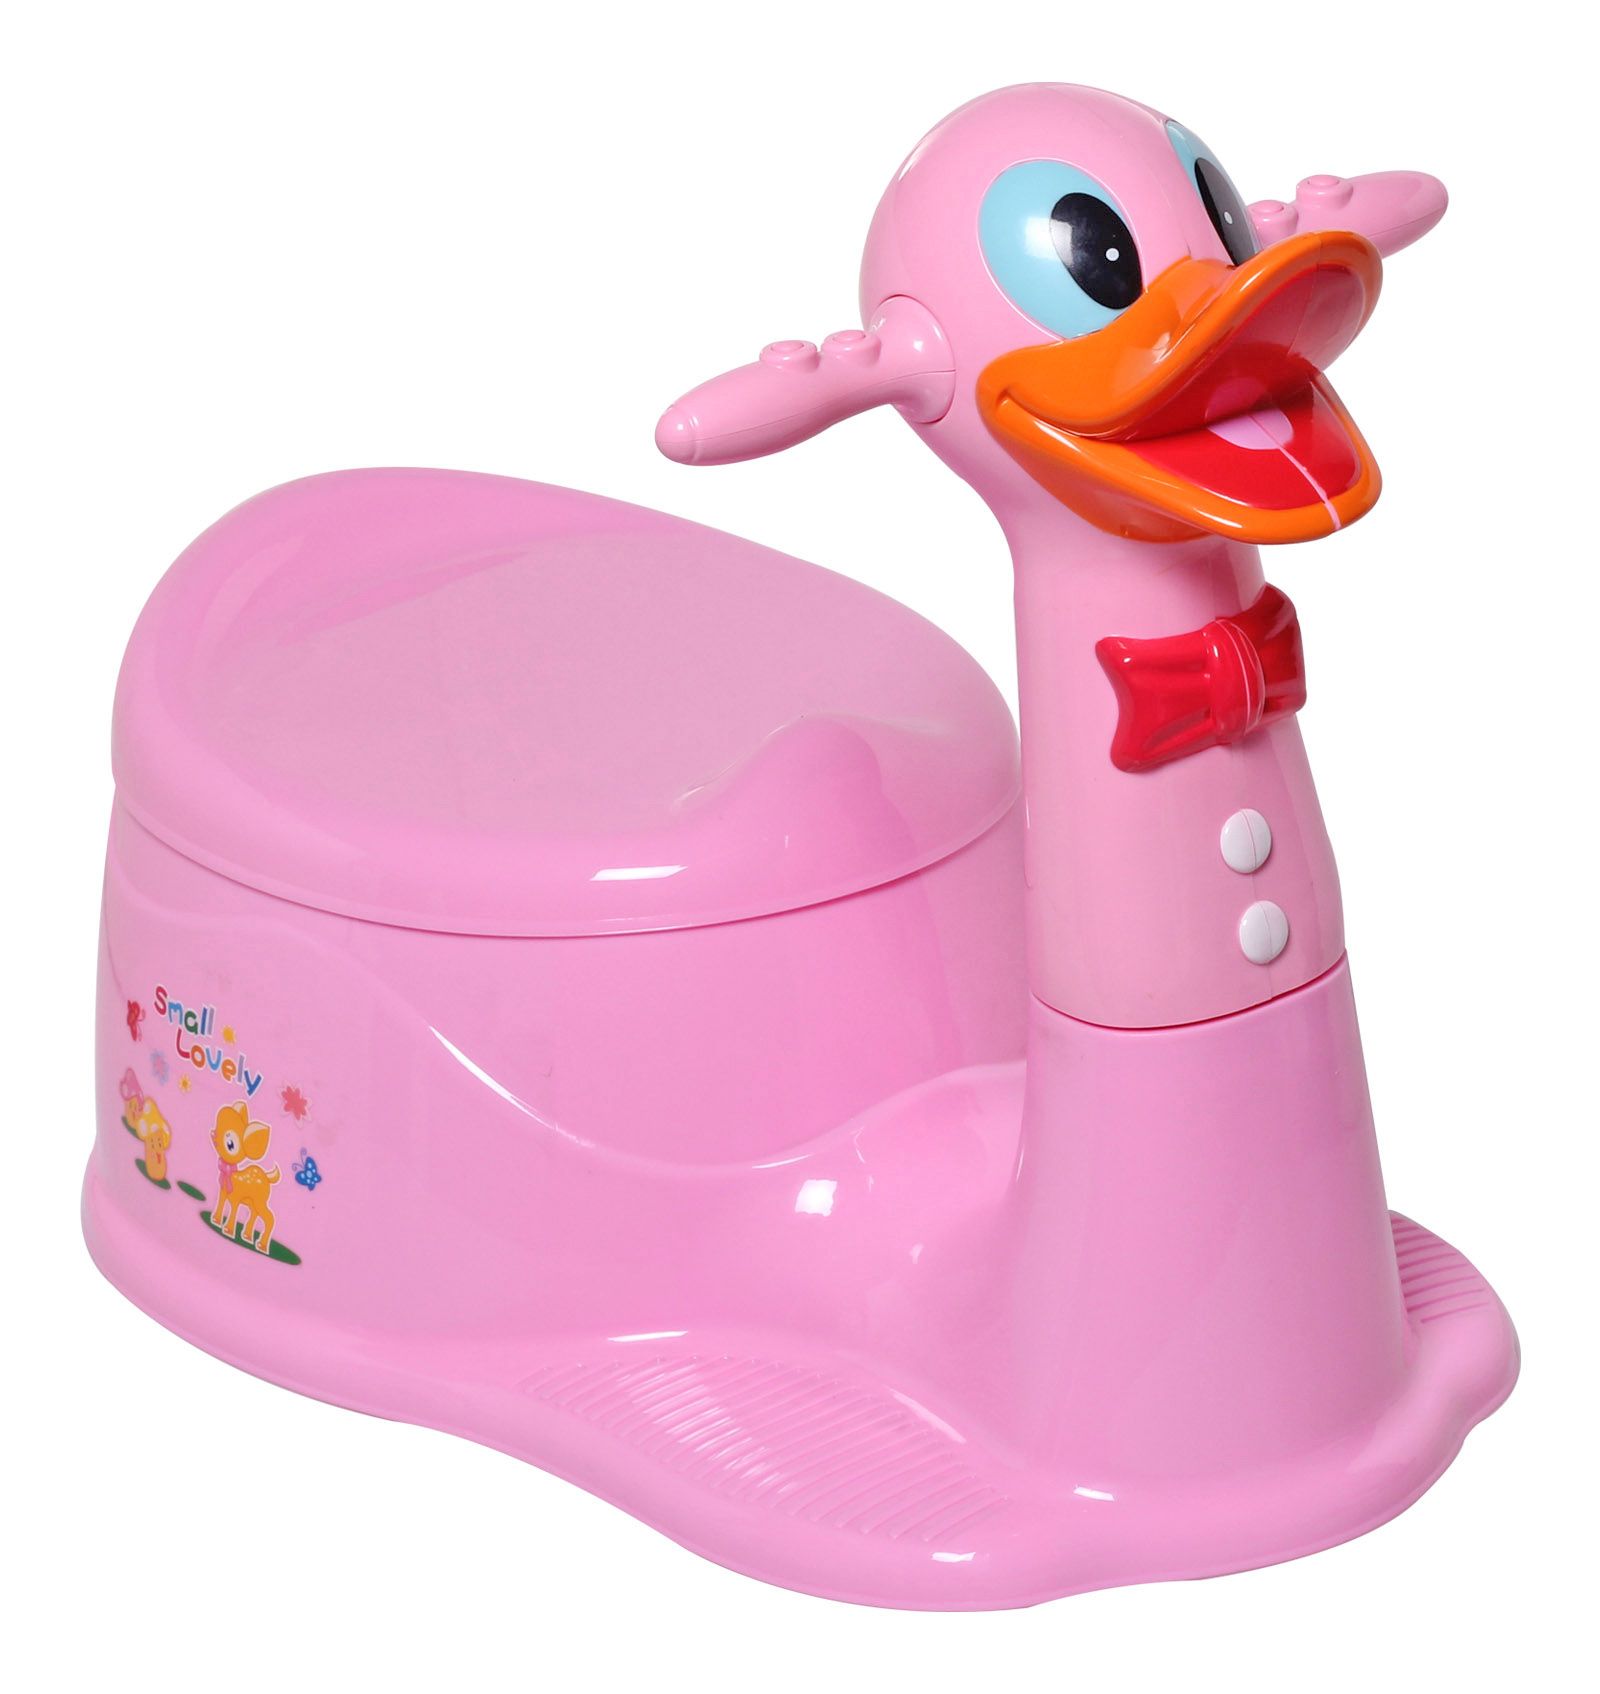 Sunbaby - Duck Shaped Potty Seat